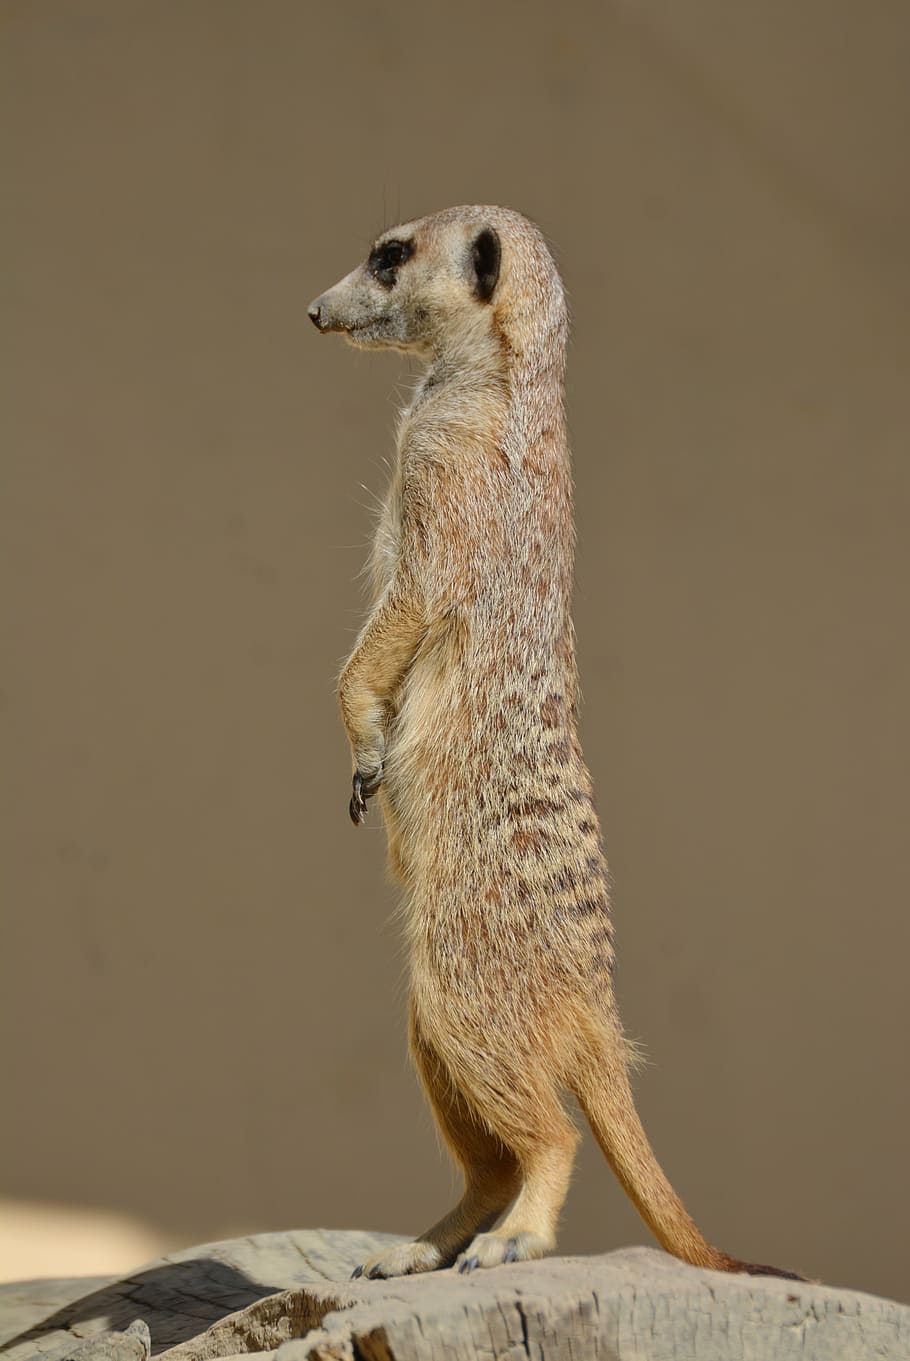 brown meerkat, meerkat, meercat, scharrtier, watch, vigilant, ausschau, attention, guard, curious